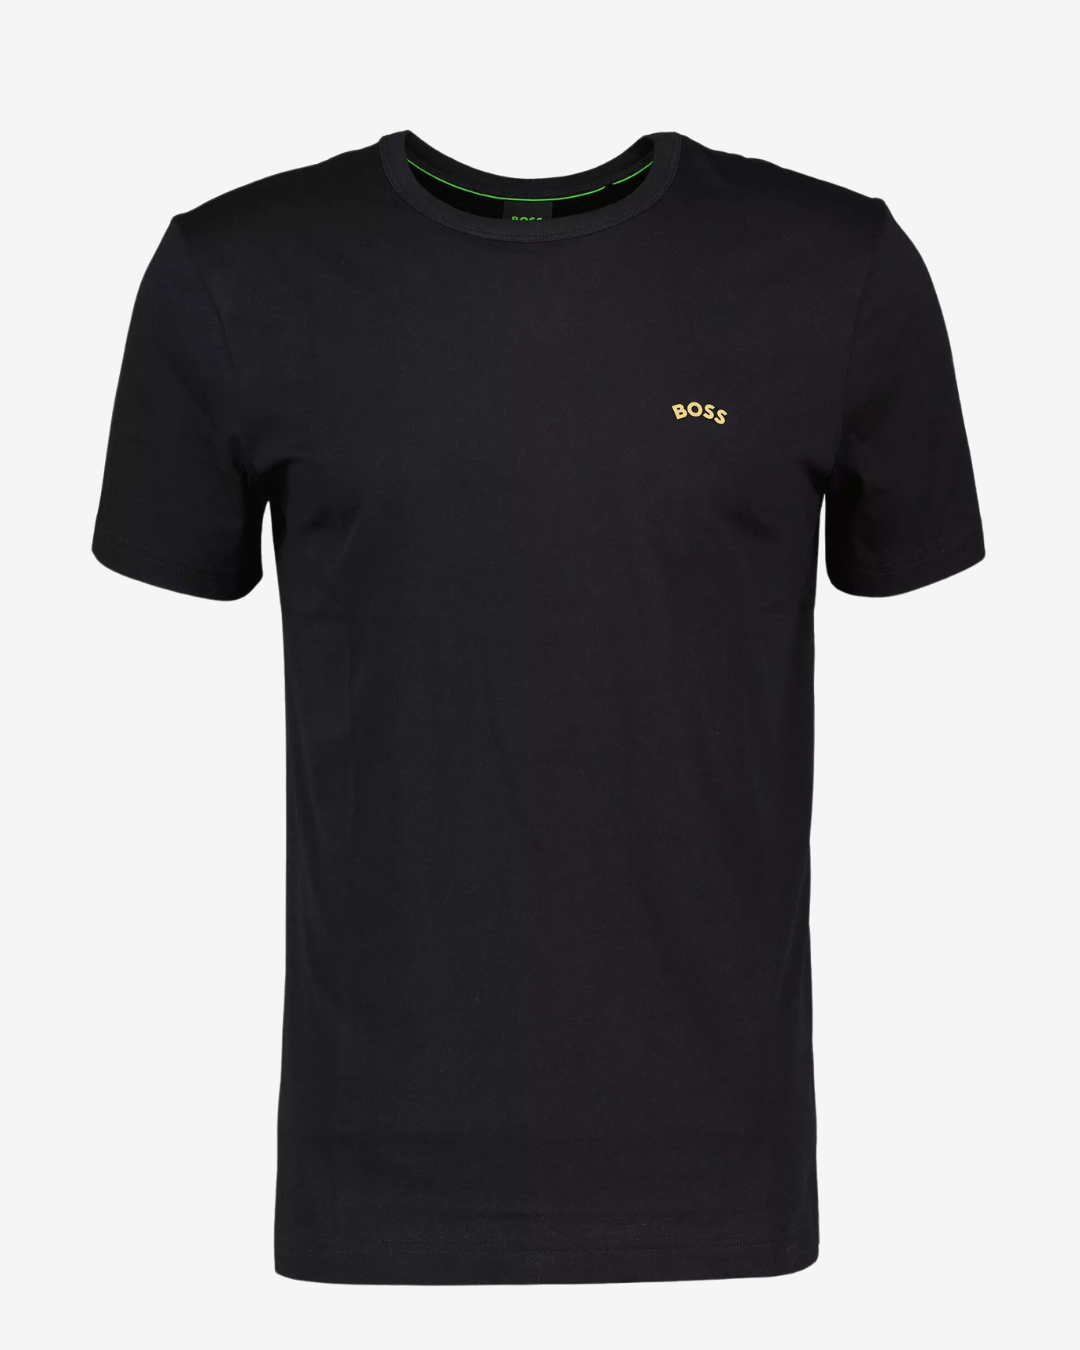 Se Hugo Boss Curved logo t-shirt - Sort / Guld - Str. M - Modish.dk hos Modish.dk